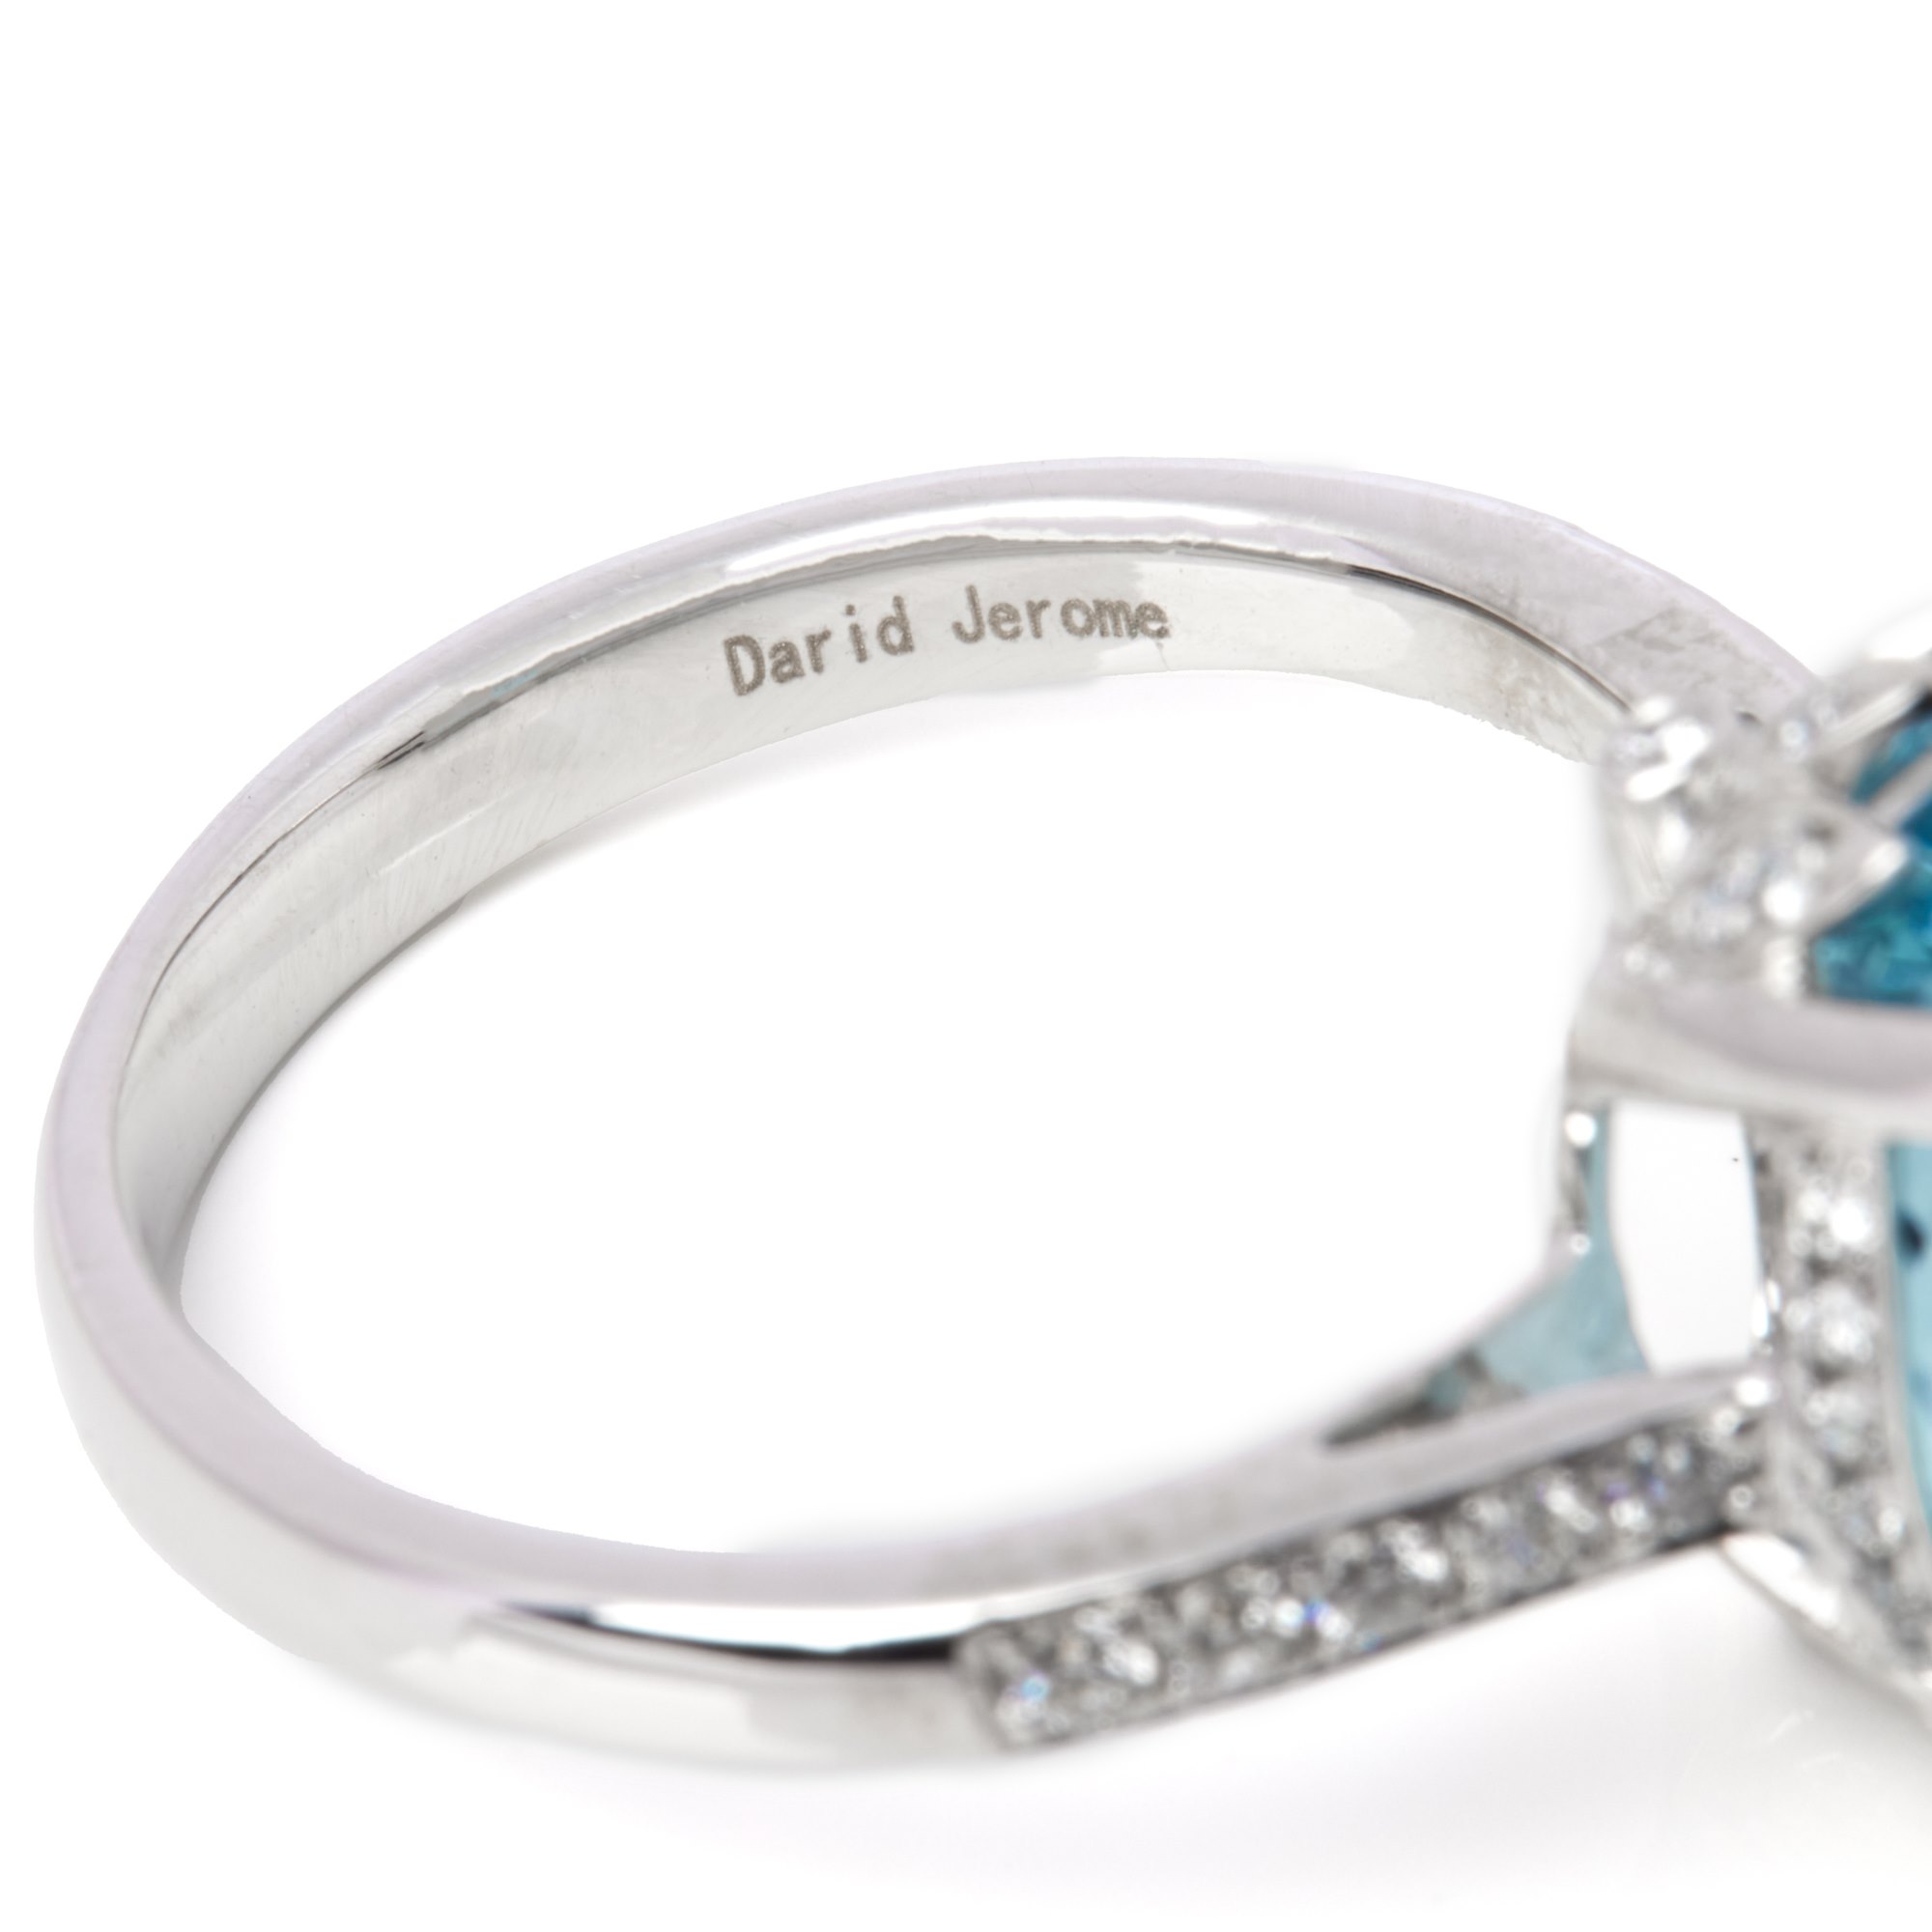 David Jerome Certified 5.62ct Oval Cut Aquamarine and Diamond Ring